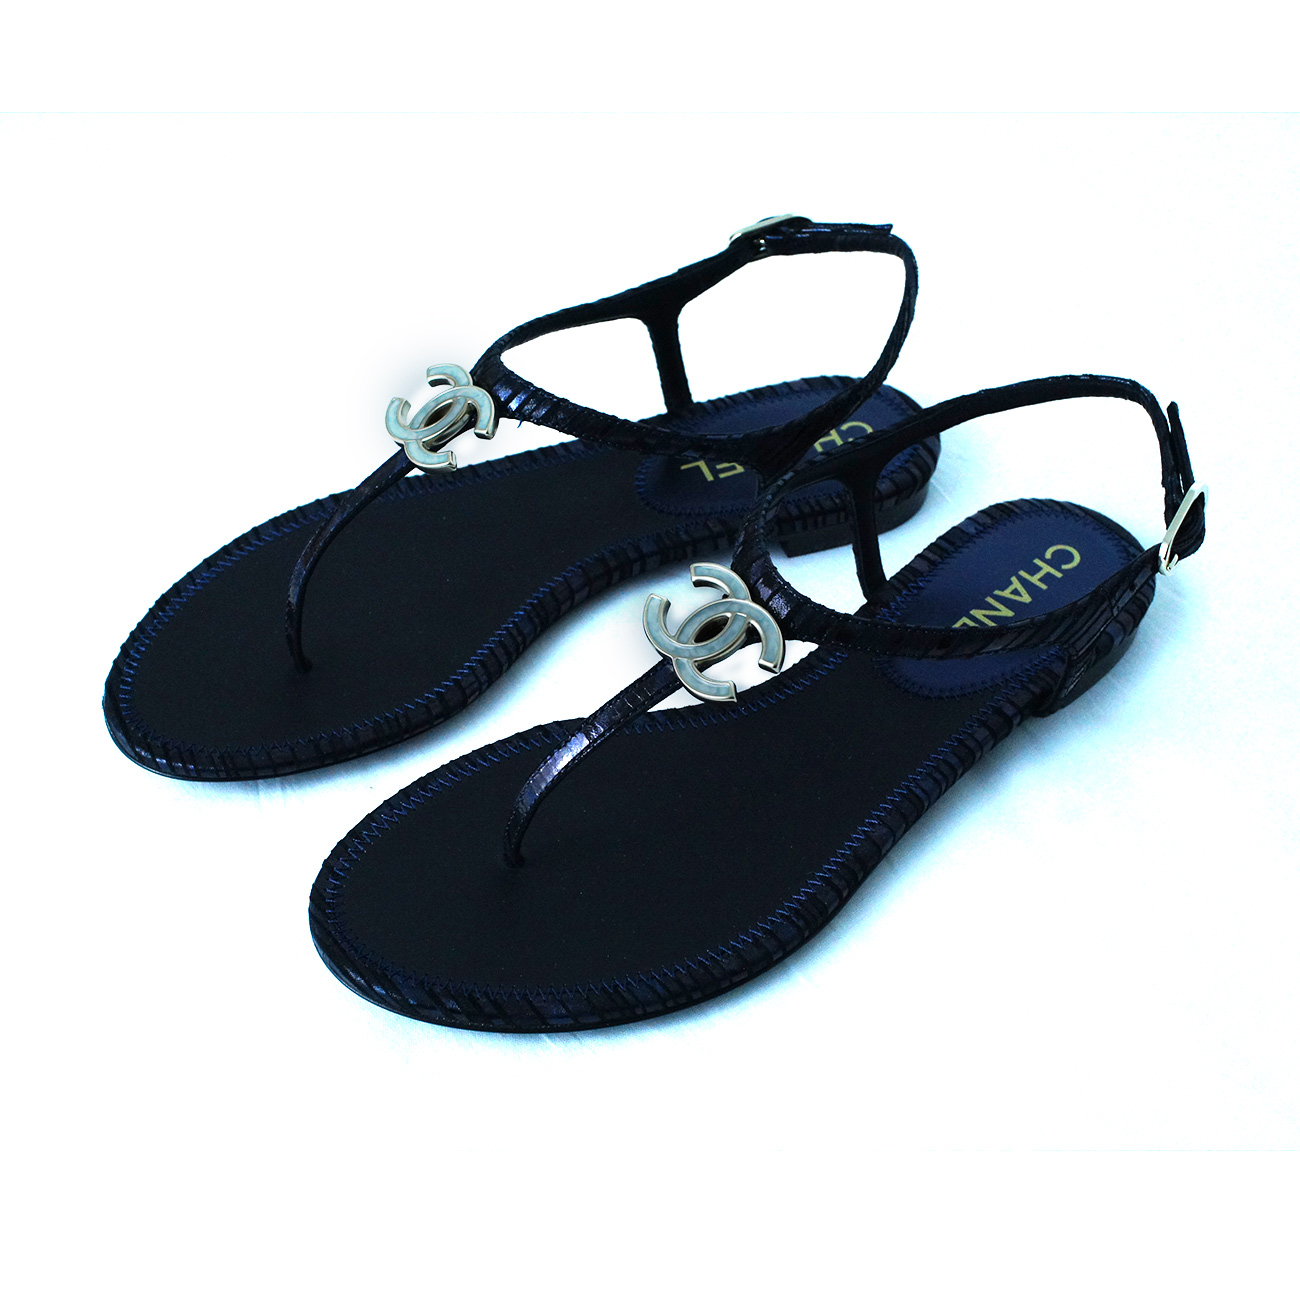 chanel logo sandals